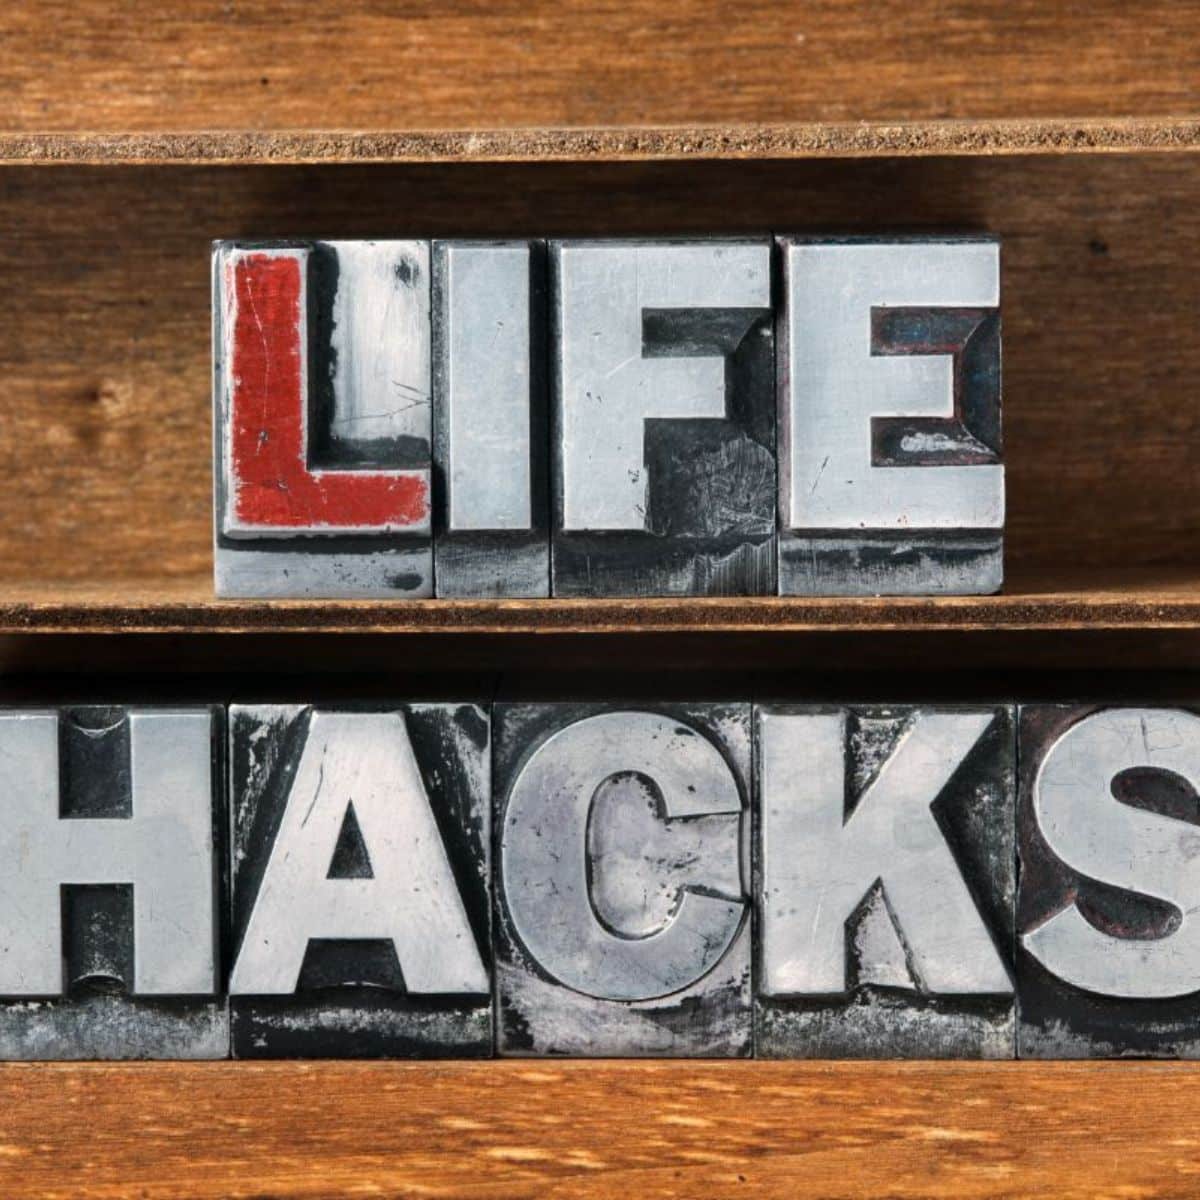 Life hacks wooden sign.